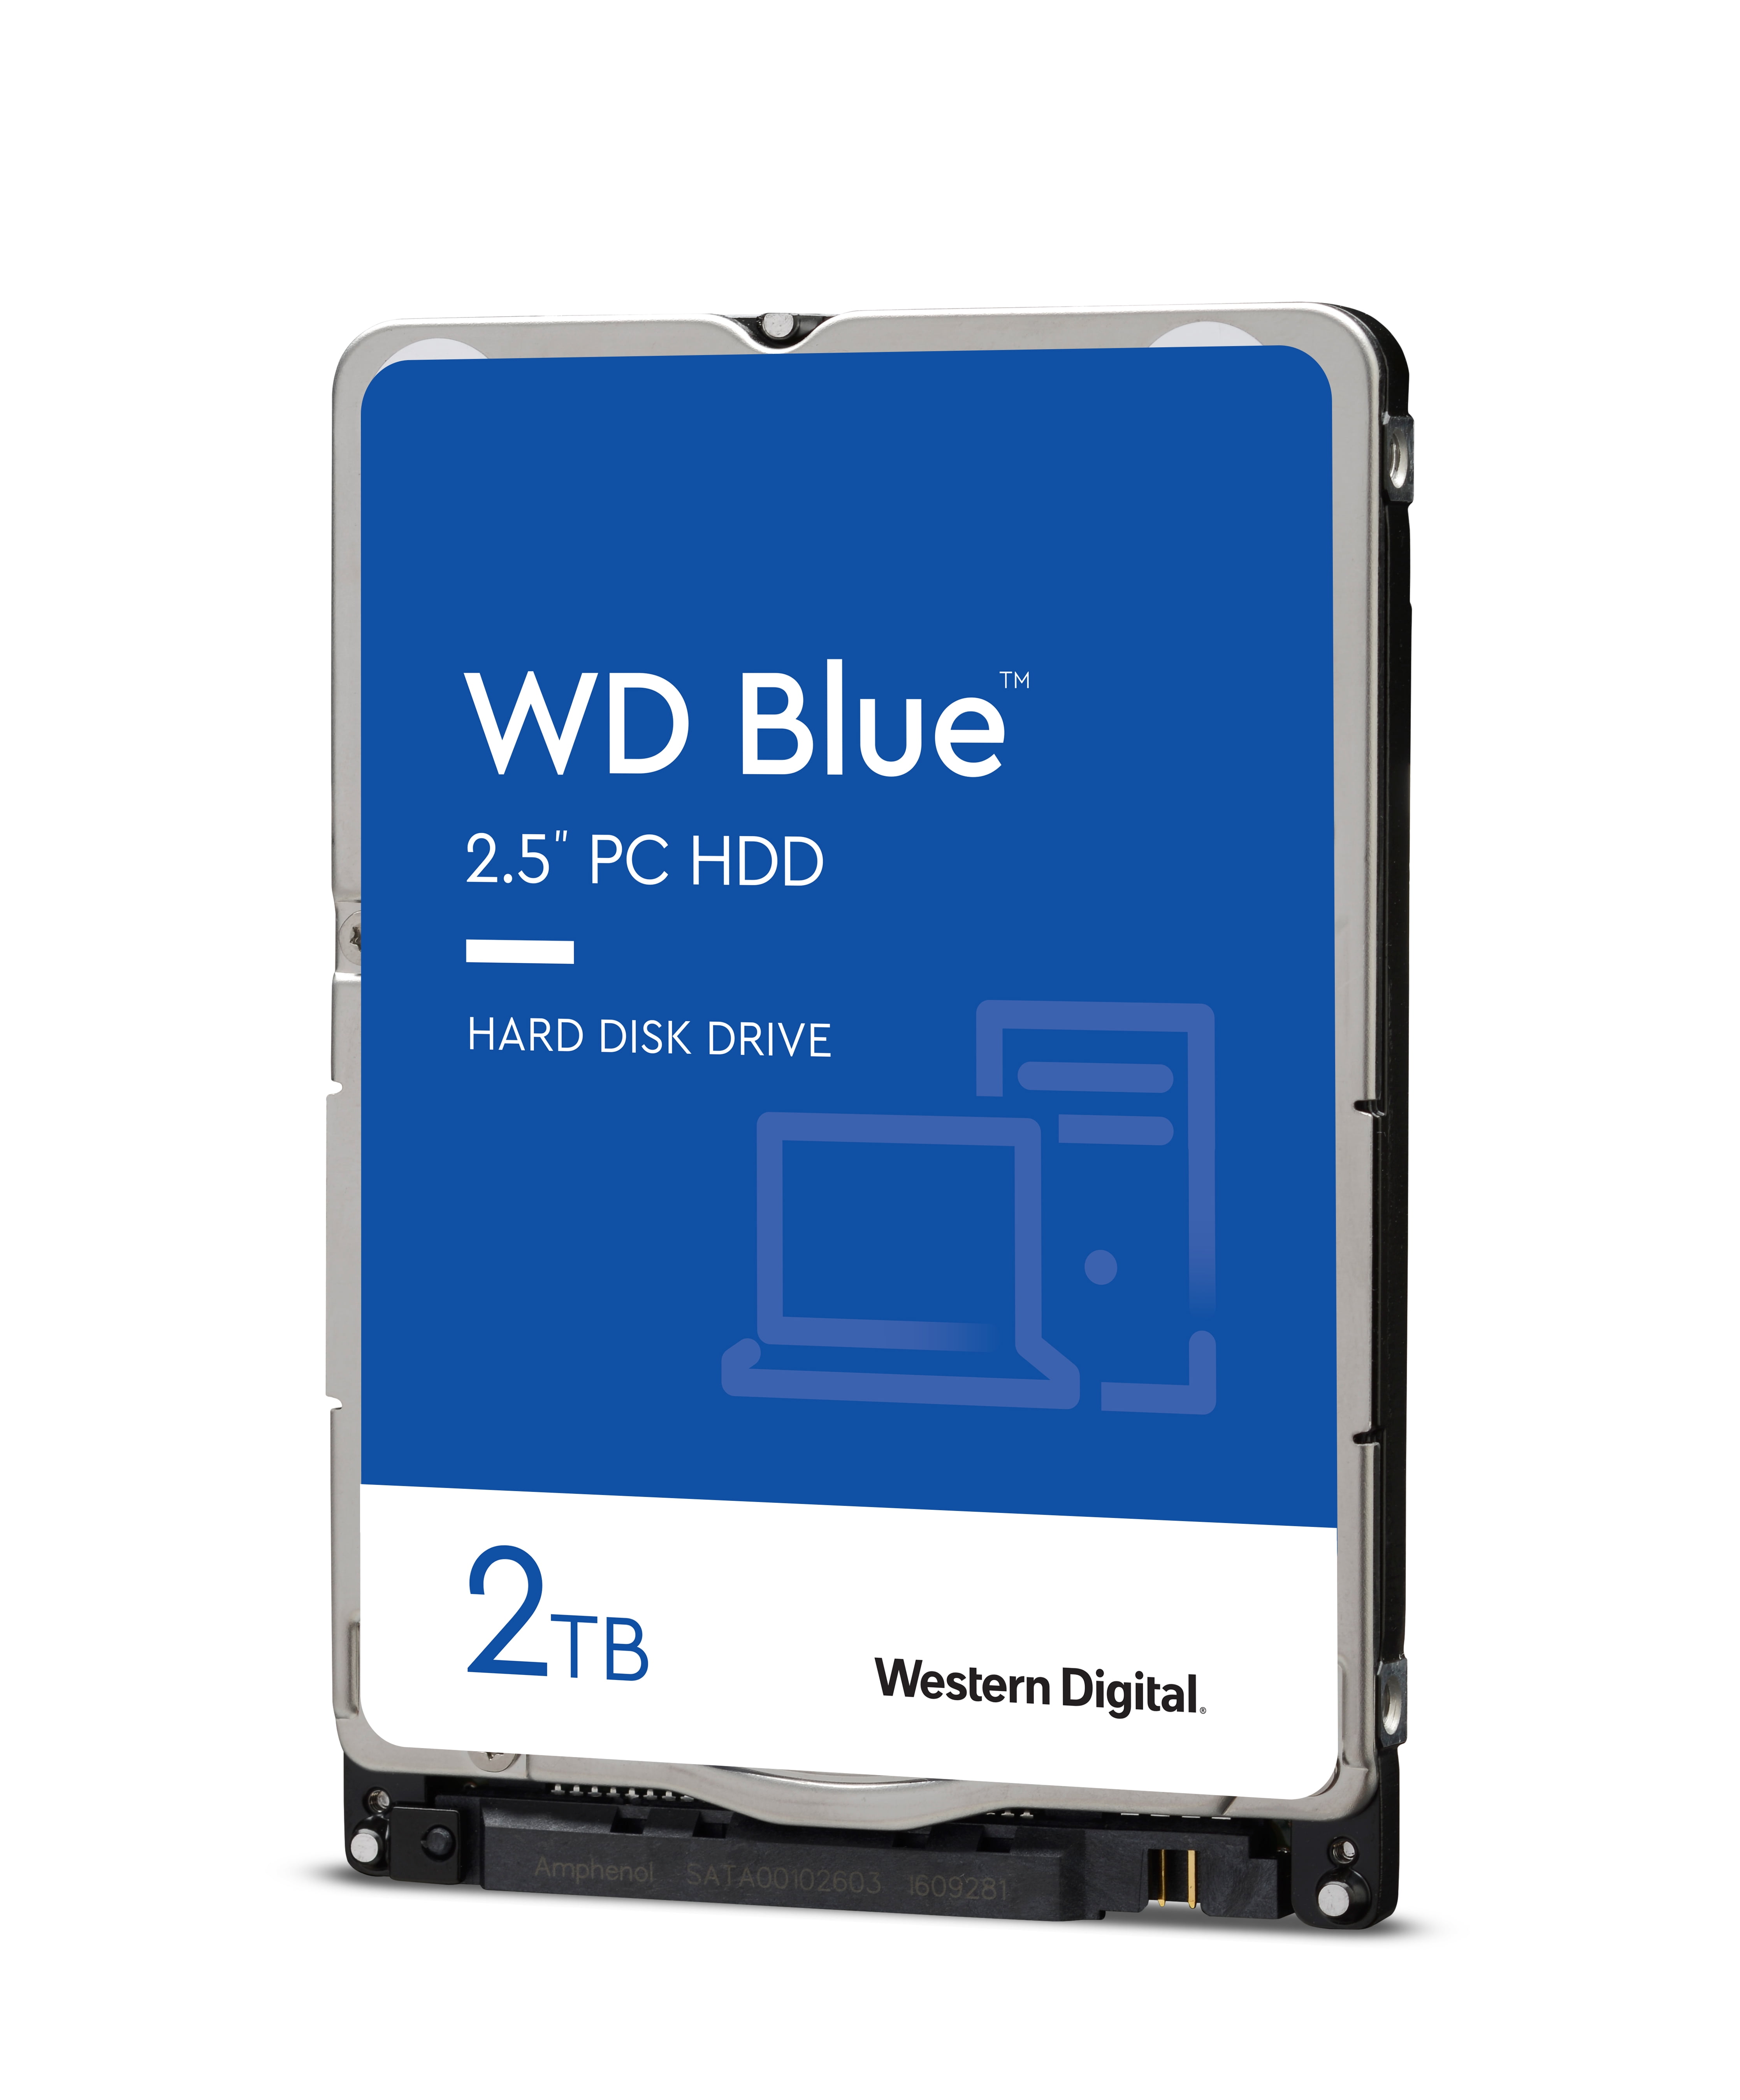 Poesi parallel snatch WD Blue 2TB 3.5" Desktop Hard Drive - WDBH2D0020HNC-NRWM - Walmart.com